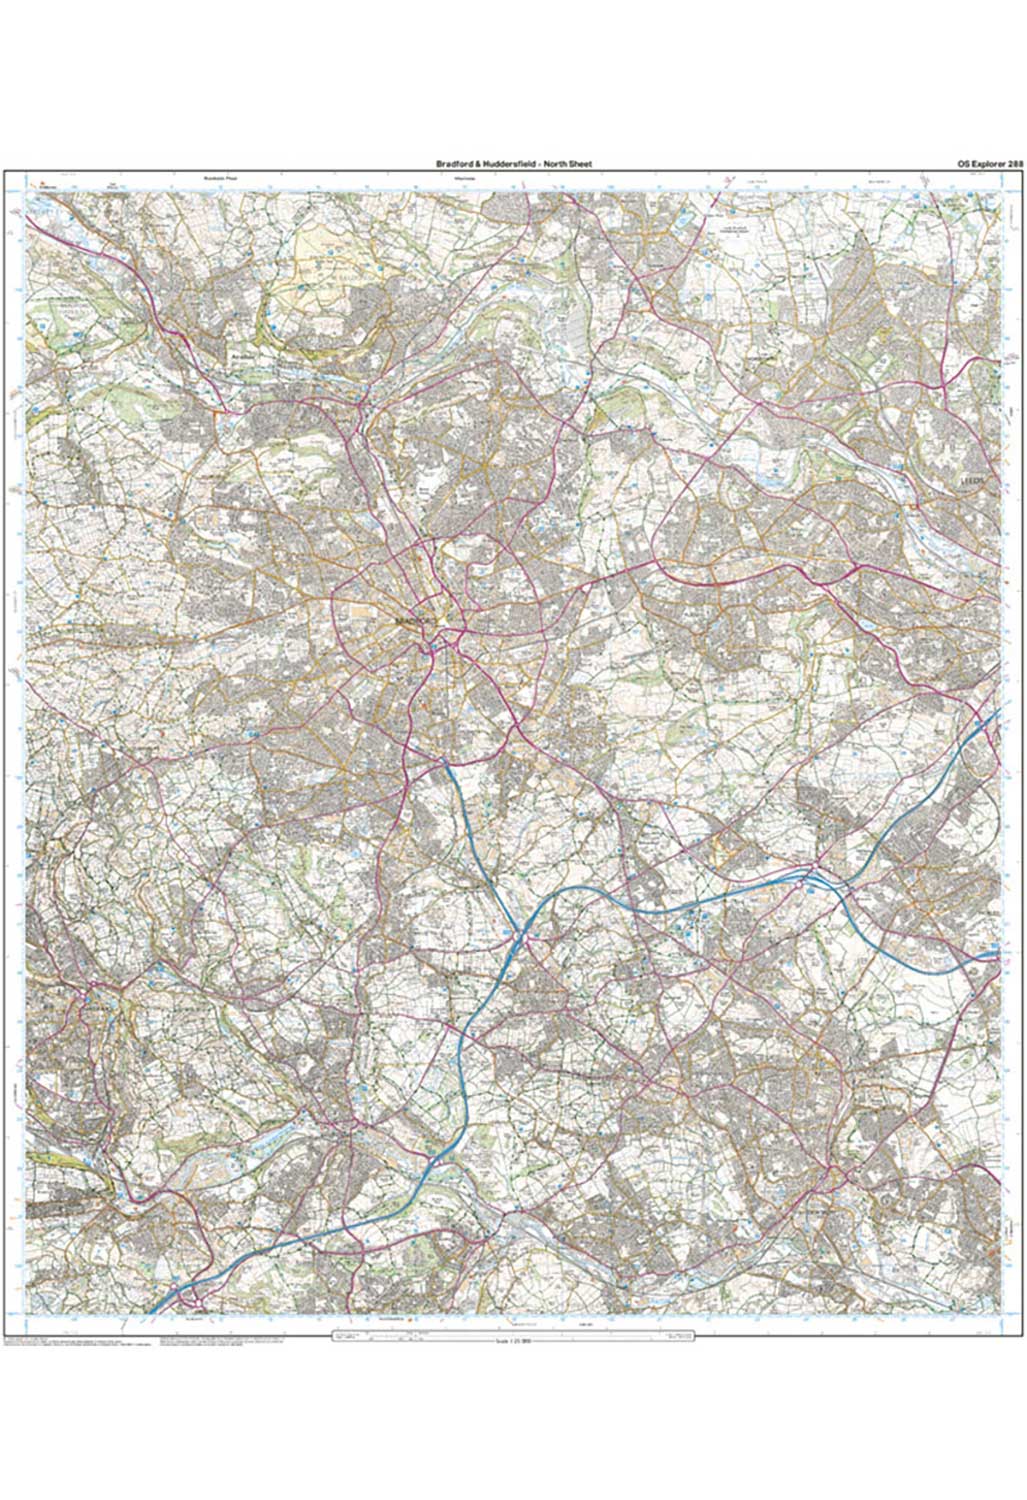 Ordnance Survey Bradford & Huddersfield East Calderdale - OS Explorer 288 Map